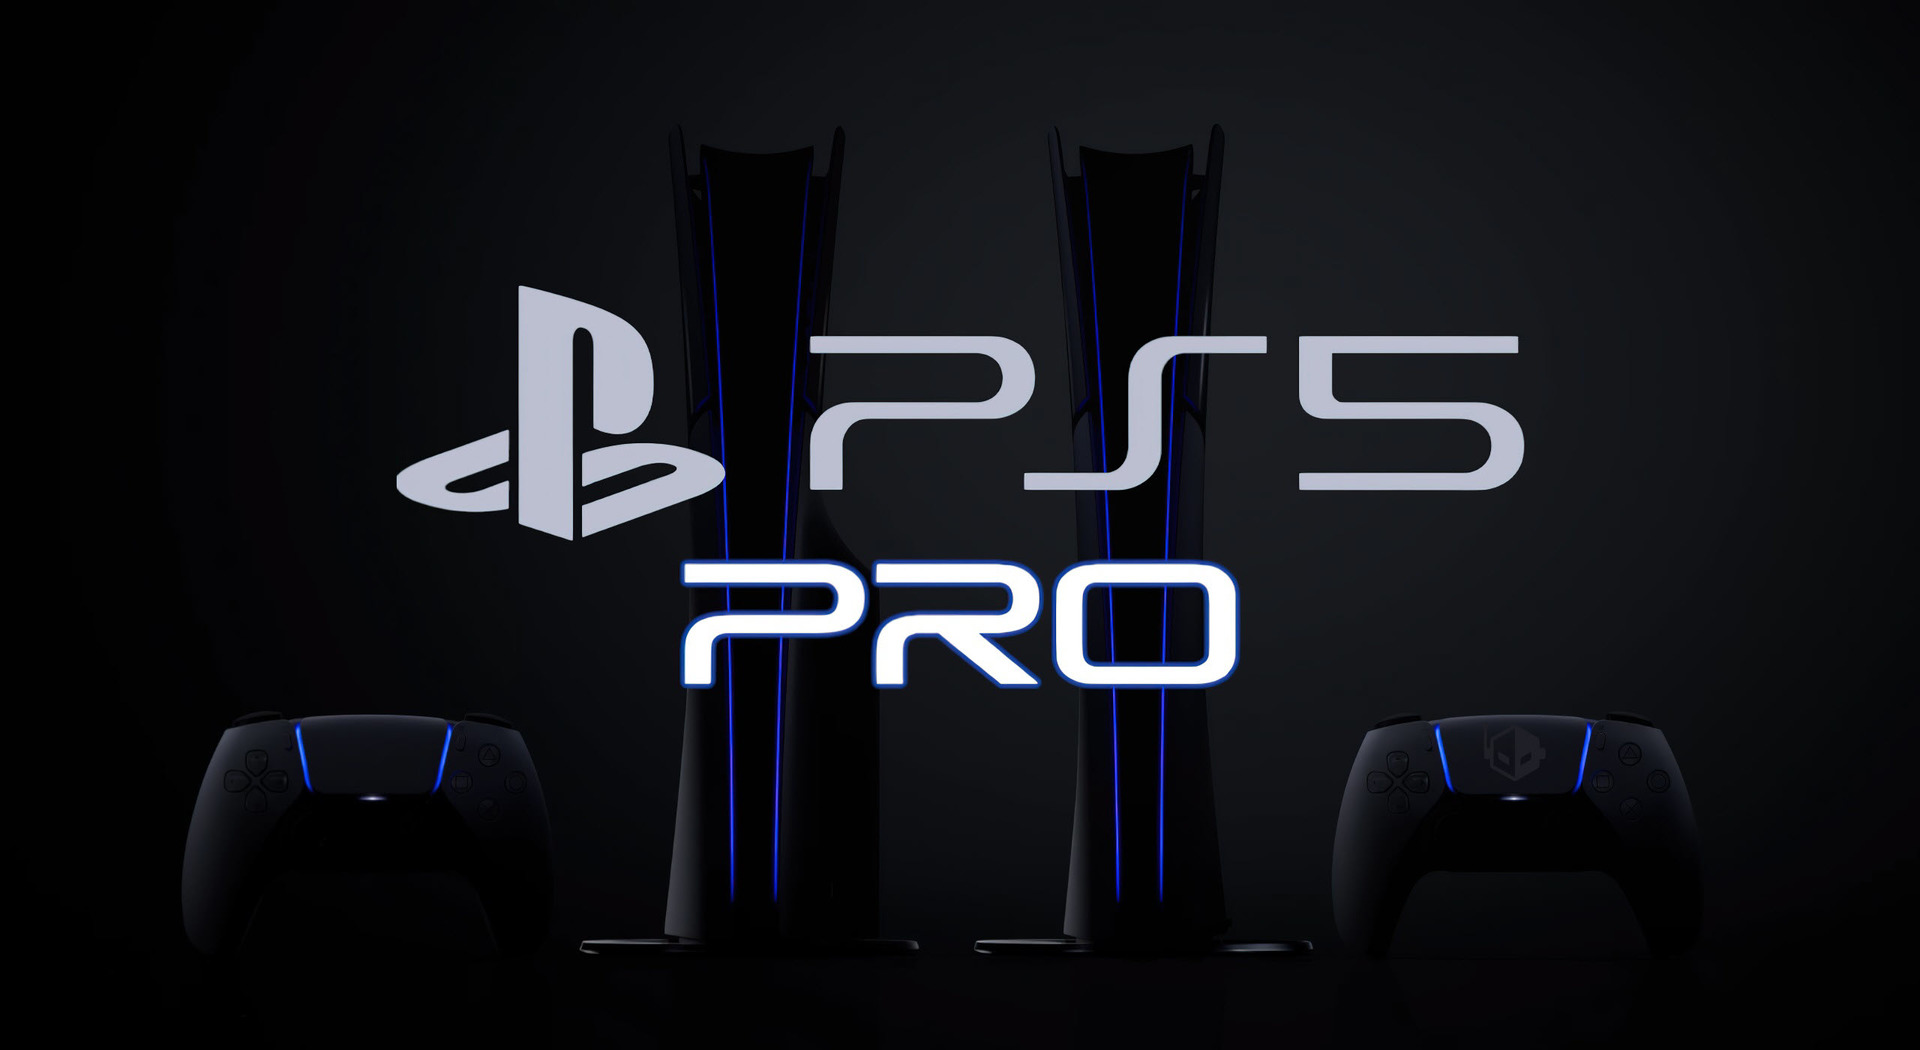 PS5 Pro-ի վիդեոչիպի տեխնիկական բնութագիրն է հայտնվել համացանցում